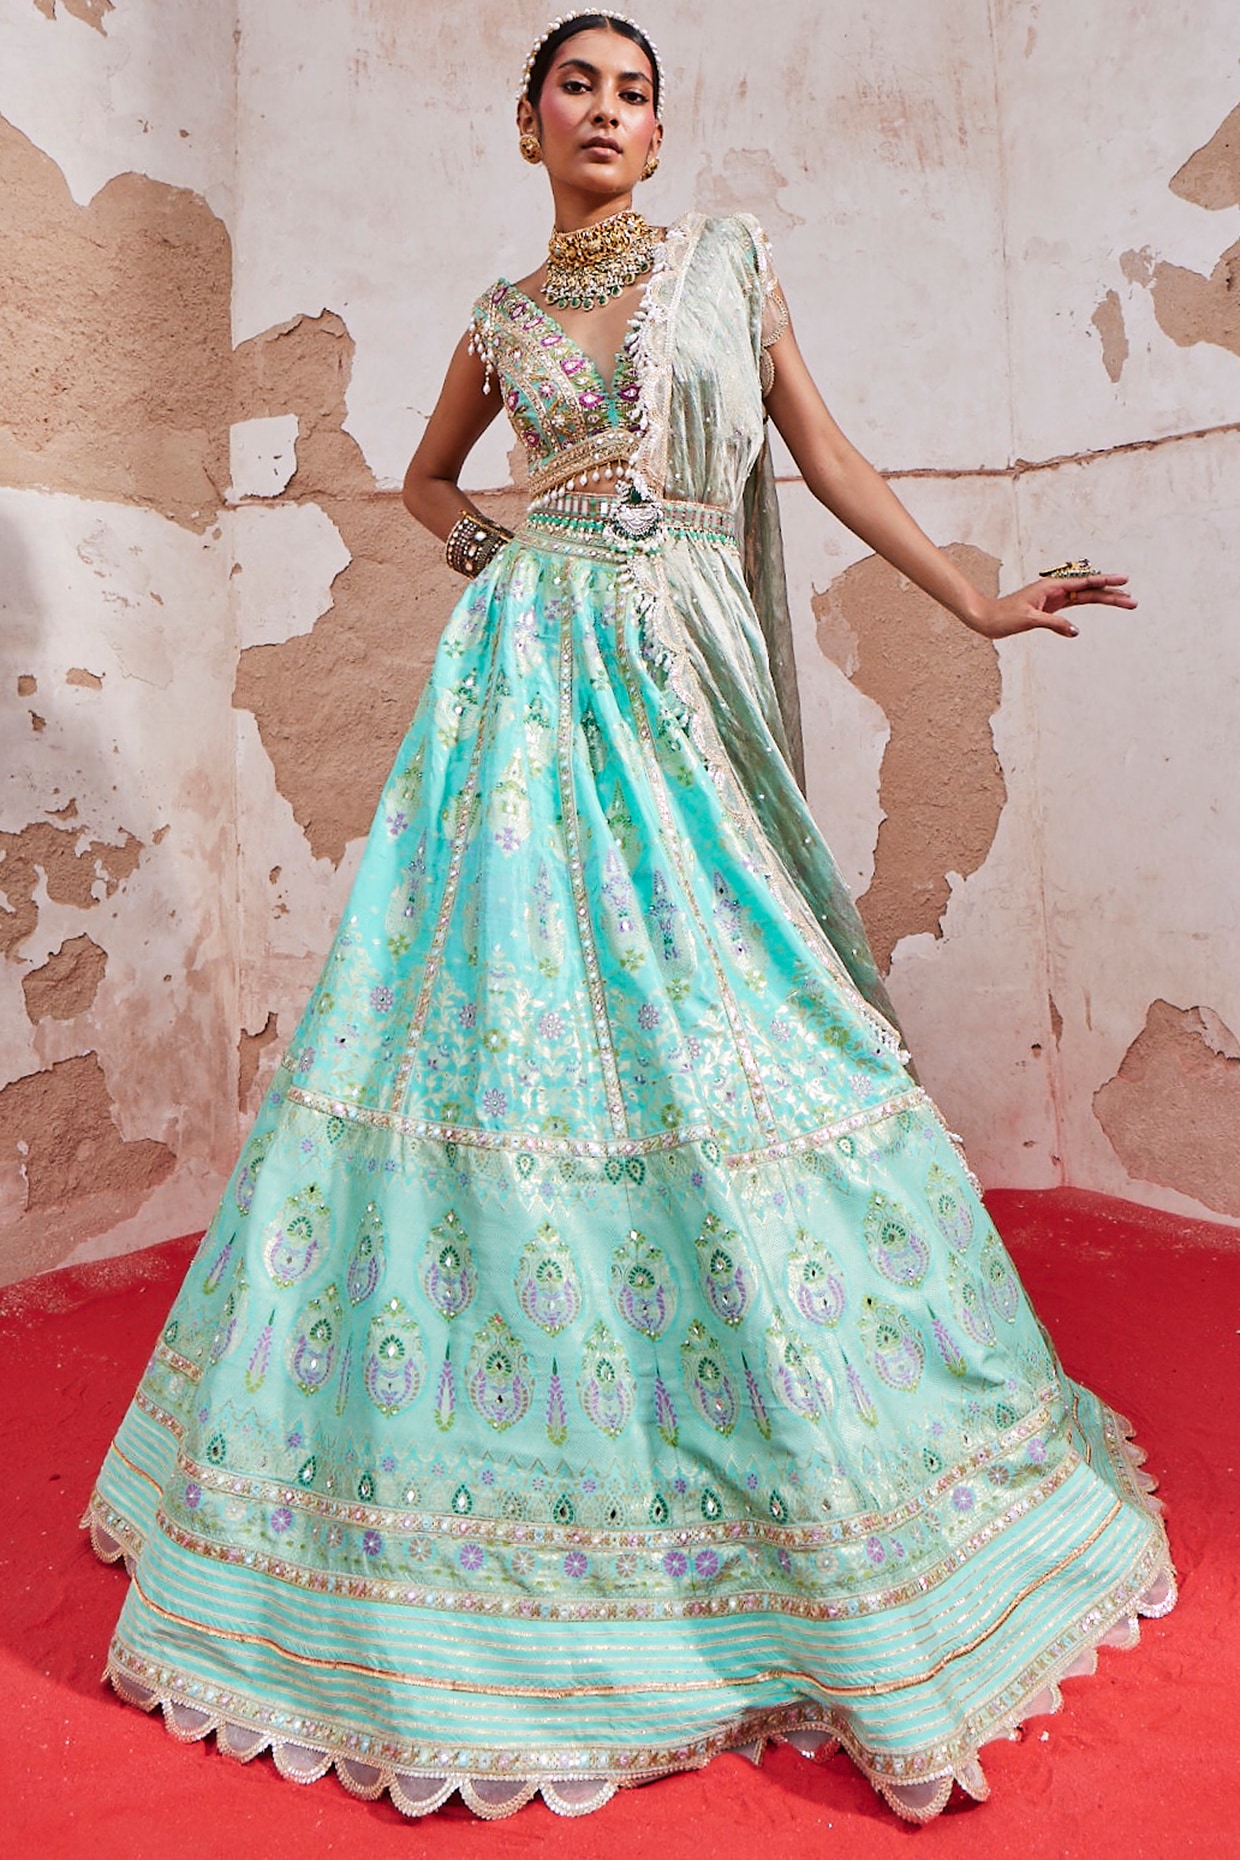 Sky Blue Thread Embroidered Silk Bridal Lehenga Choli With Pink Dupatta at  Rs 3100 | कढ़ाई वाला दुल्हन का लेहंगा in Surat | ID: 21875616733